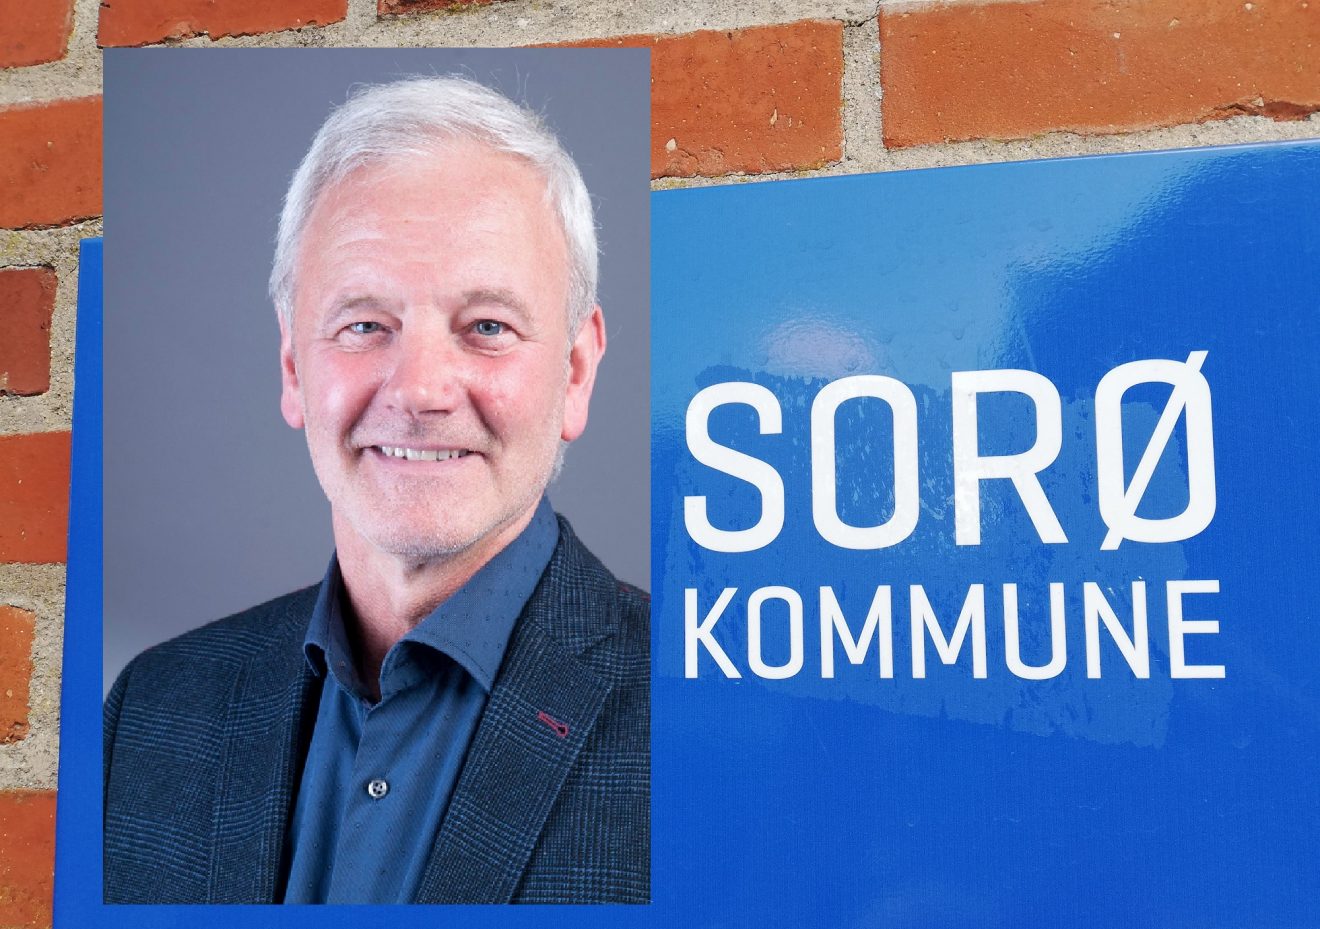 Dansk Folkeparti genvalgte Lars Schmidt